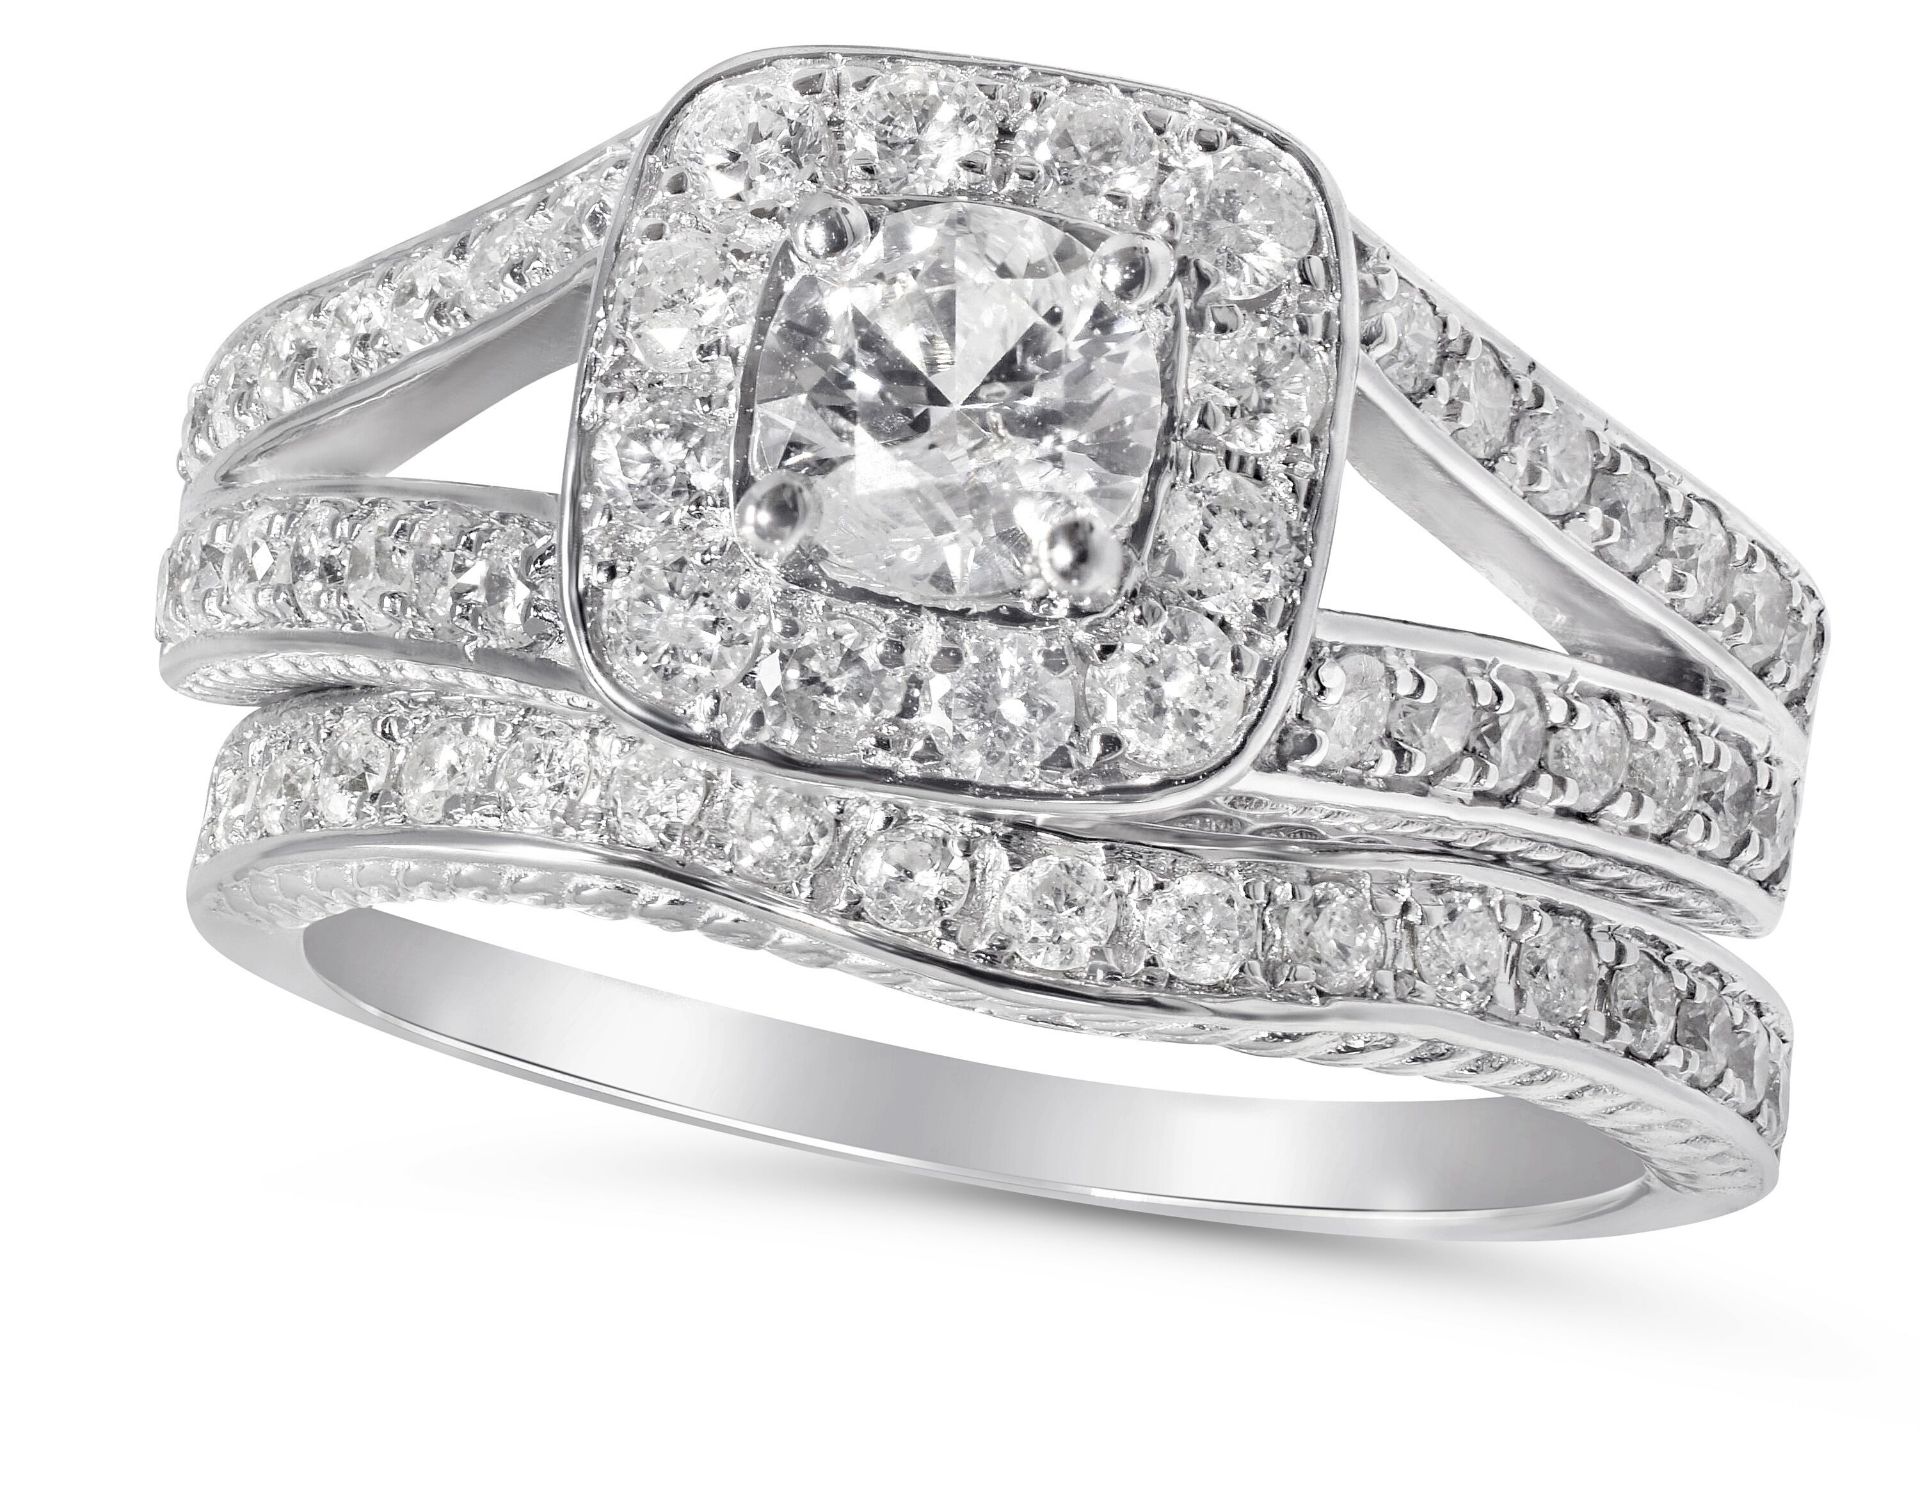 Bridal Set of Matching Engagement and Wedding Ring - Image 2 of 4